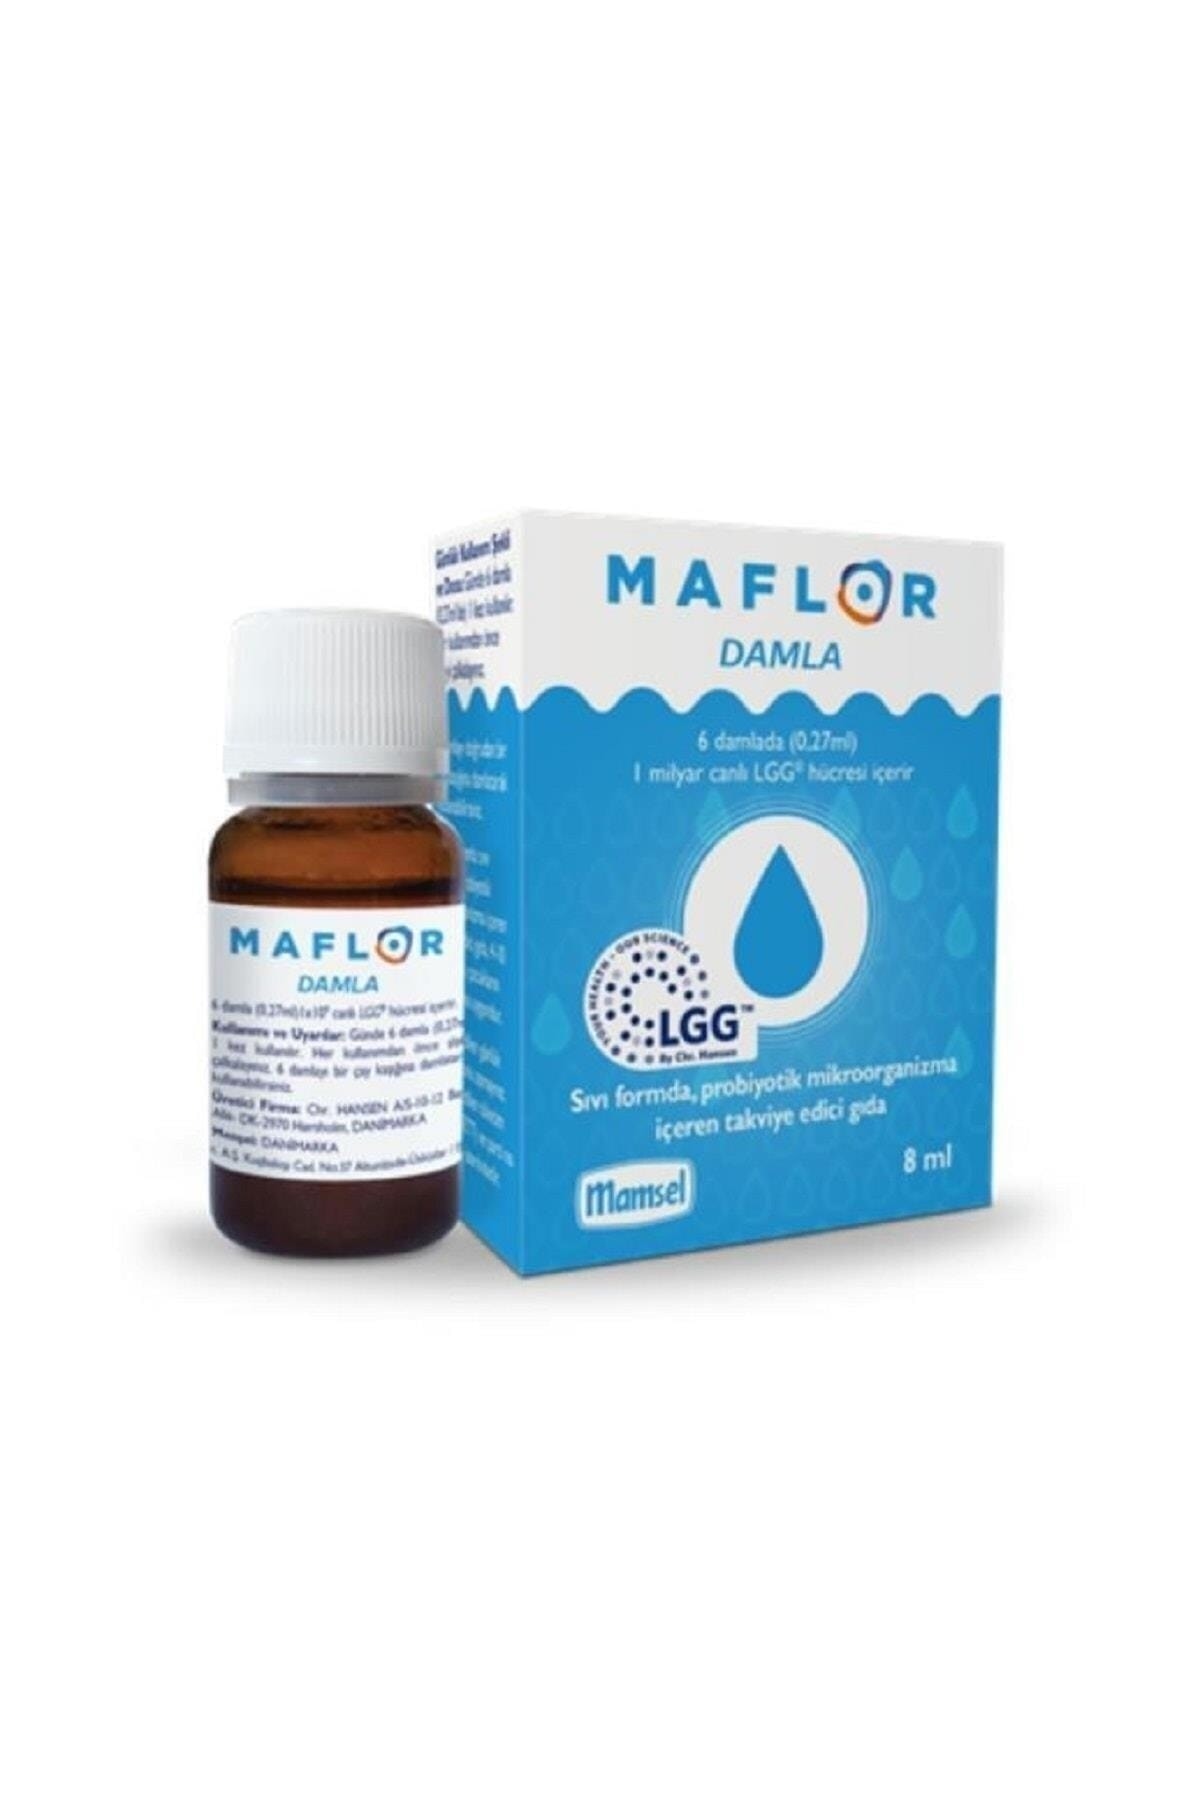 MAFLOR Myflor Damla Lgg 8 ml